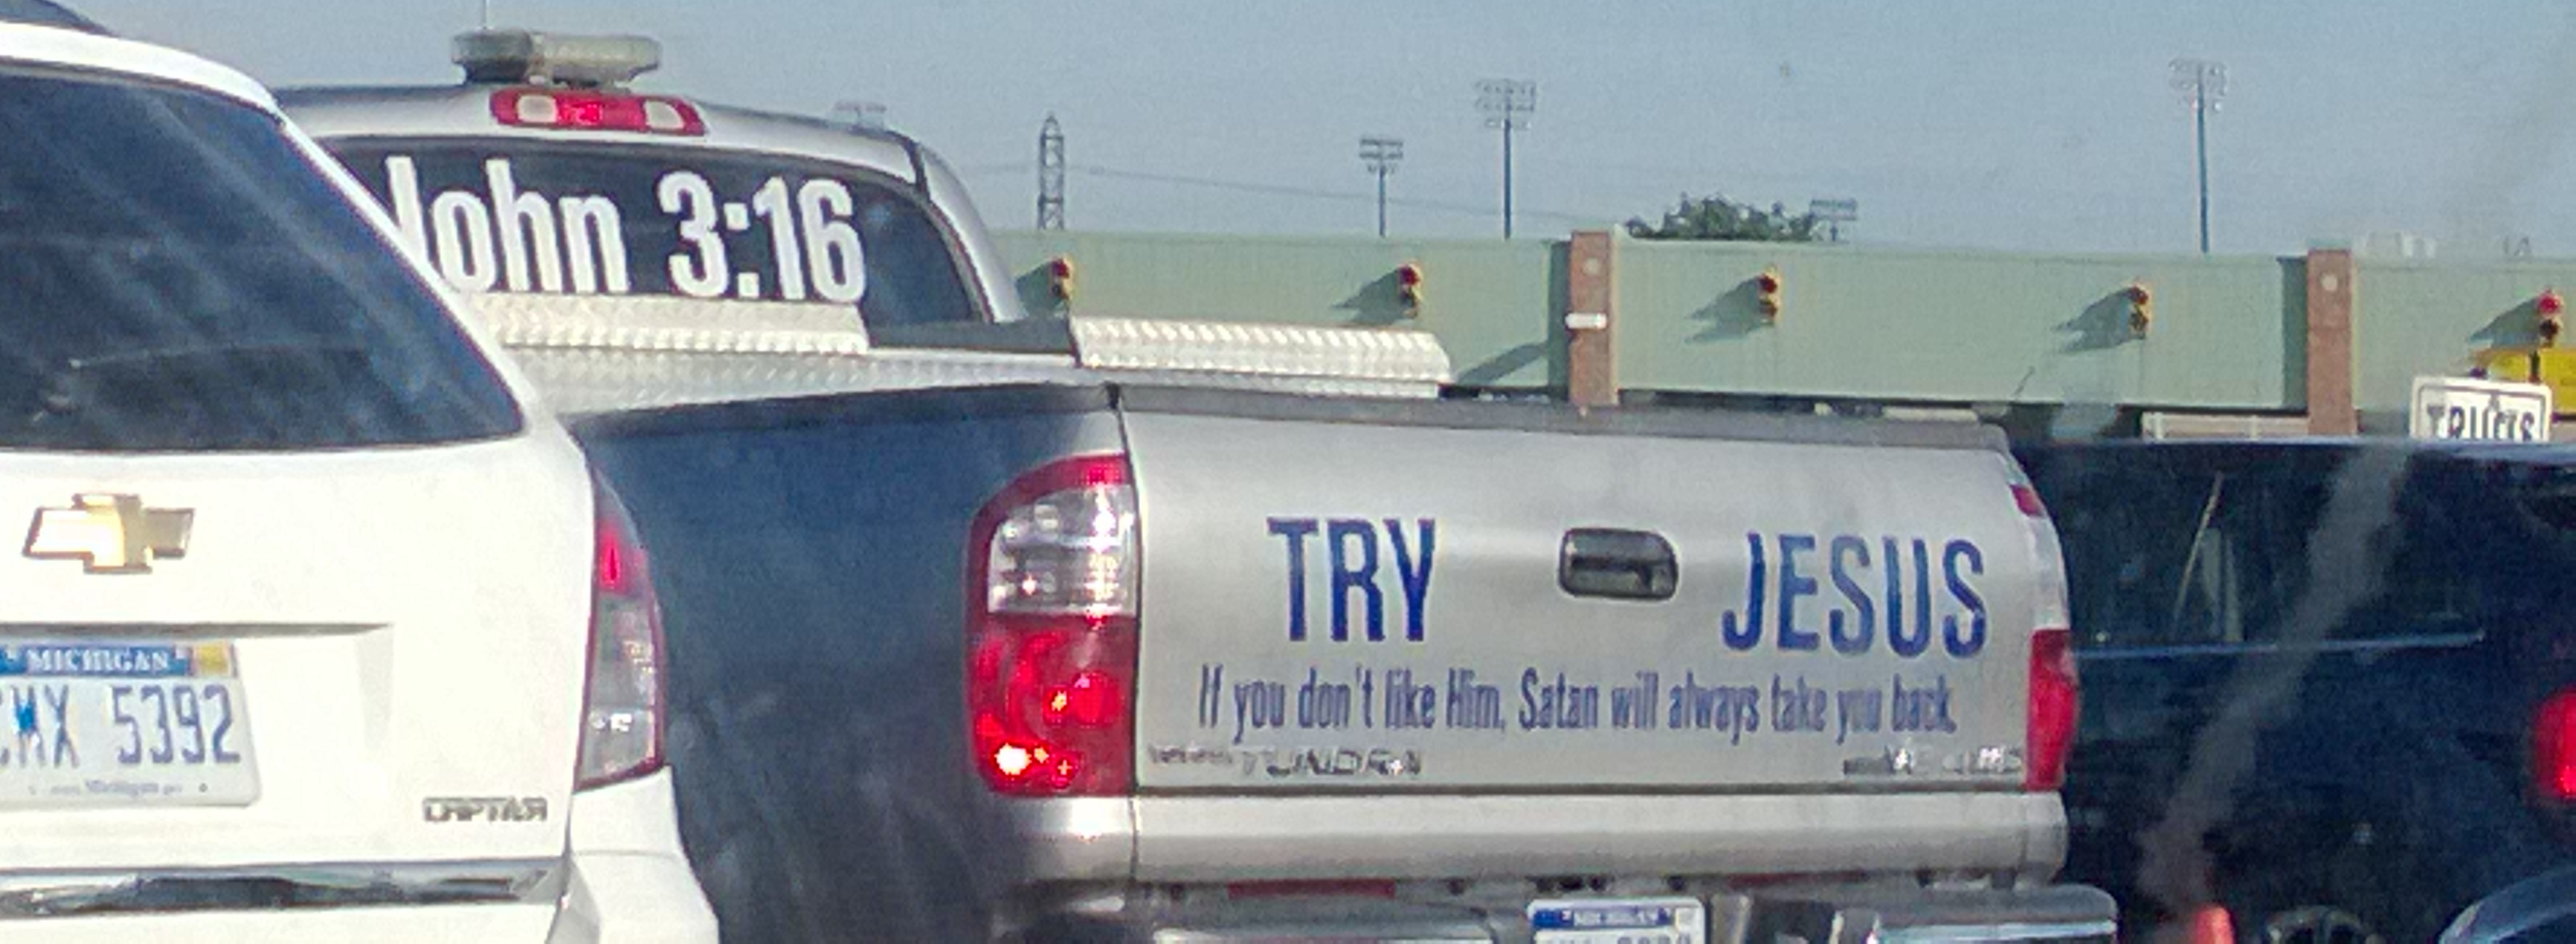 Montreal-try Jesus truck